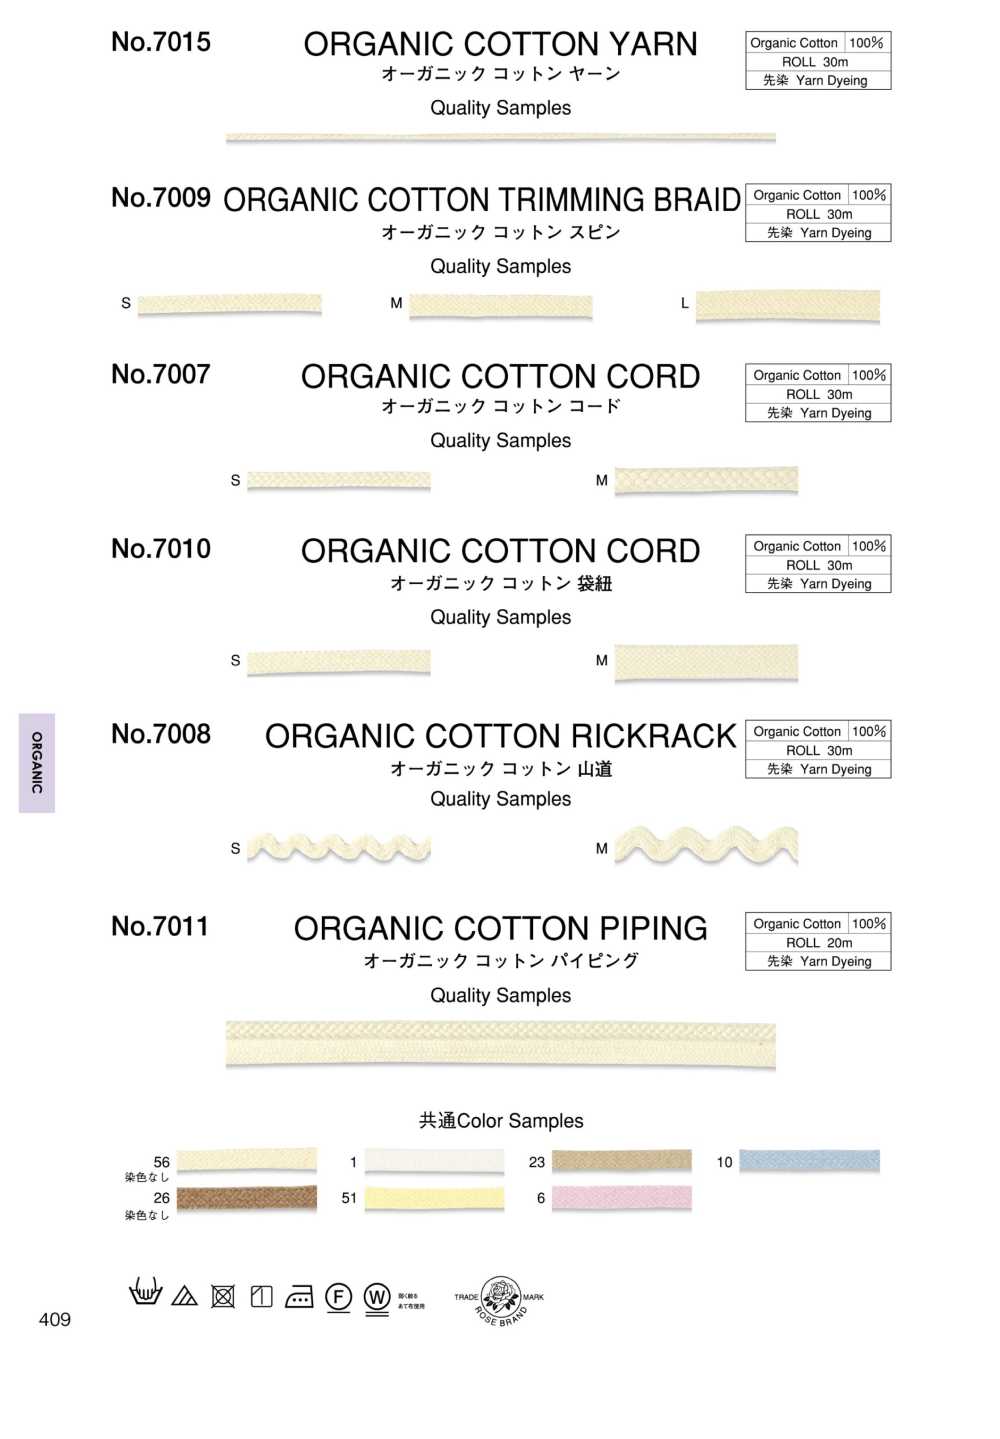 7007 Organic Cotton Cord[Ribbon Tape Cord] ROSE BRAND (Marushin)